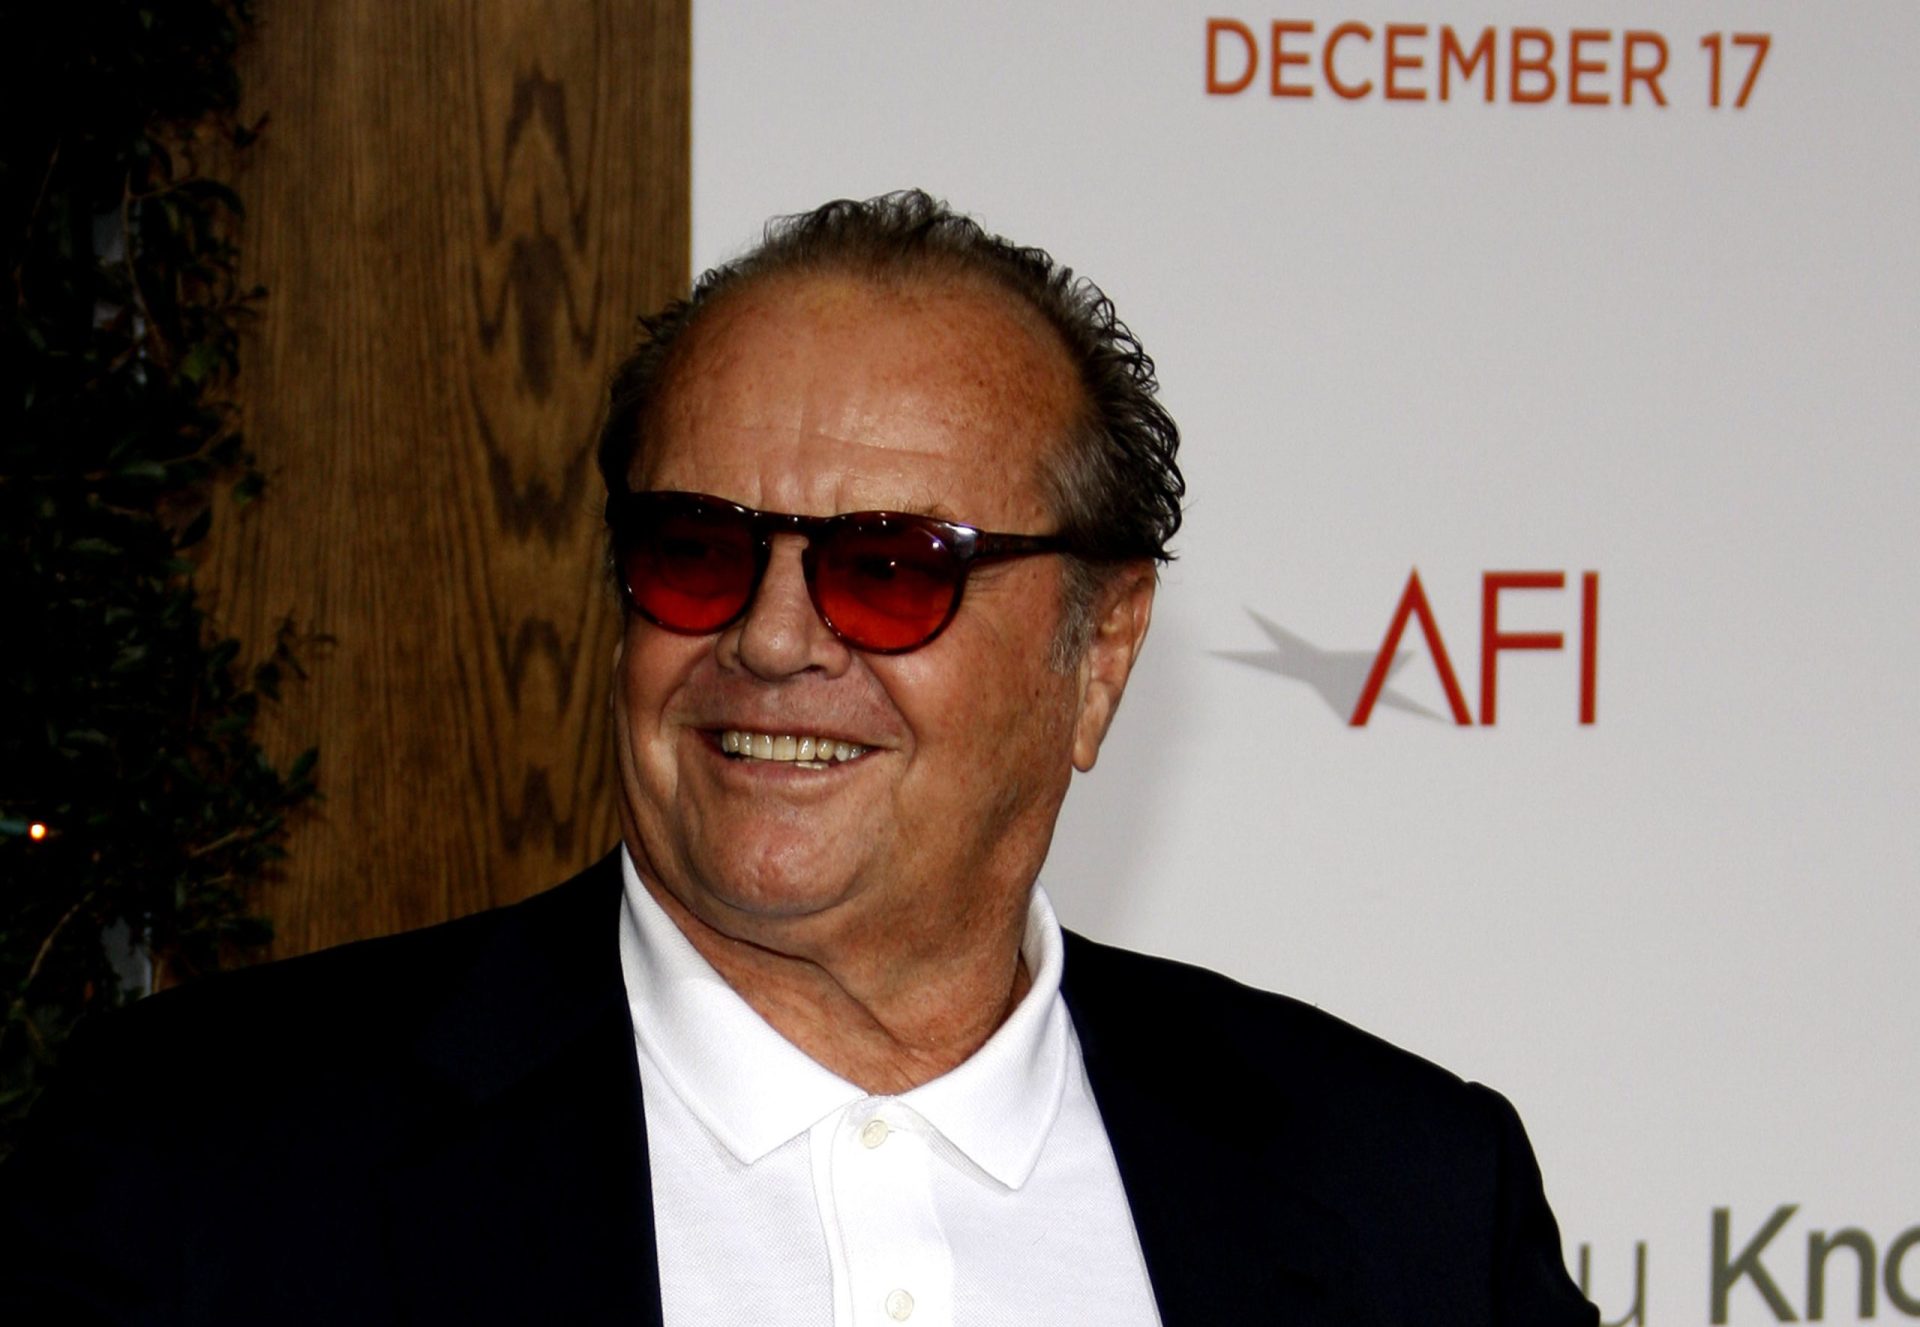 Jack Nicholson surge em público&#8230;com uns quilos a mais [FOTO]